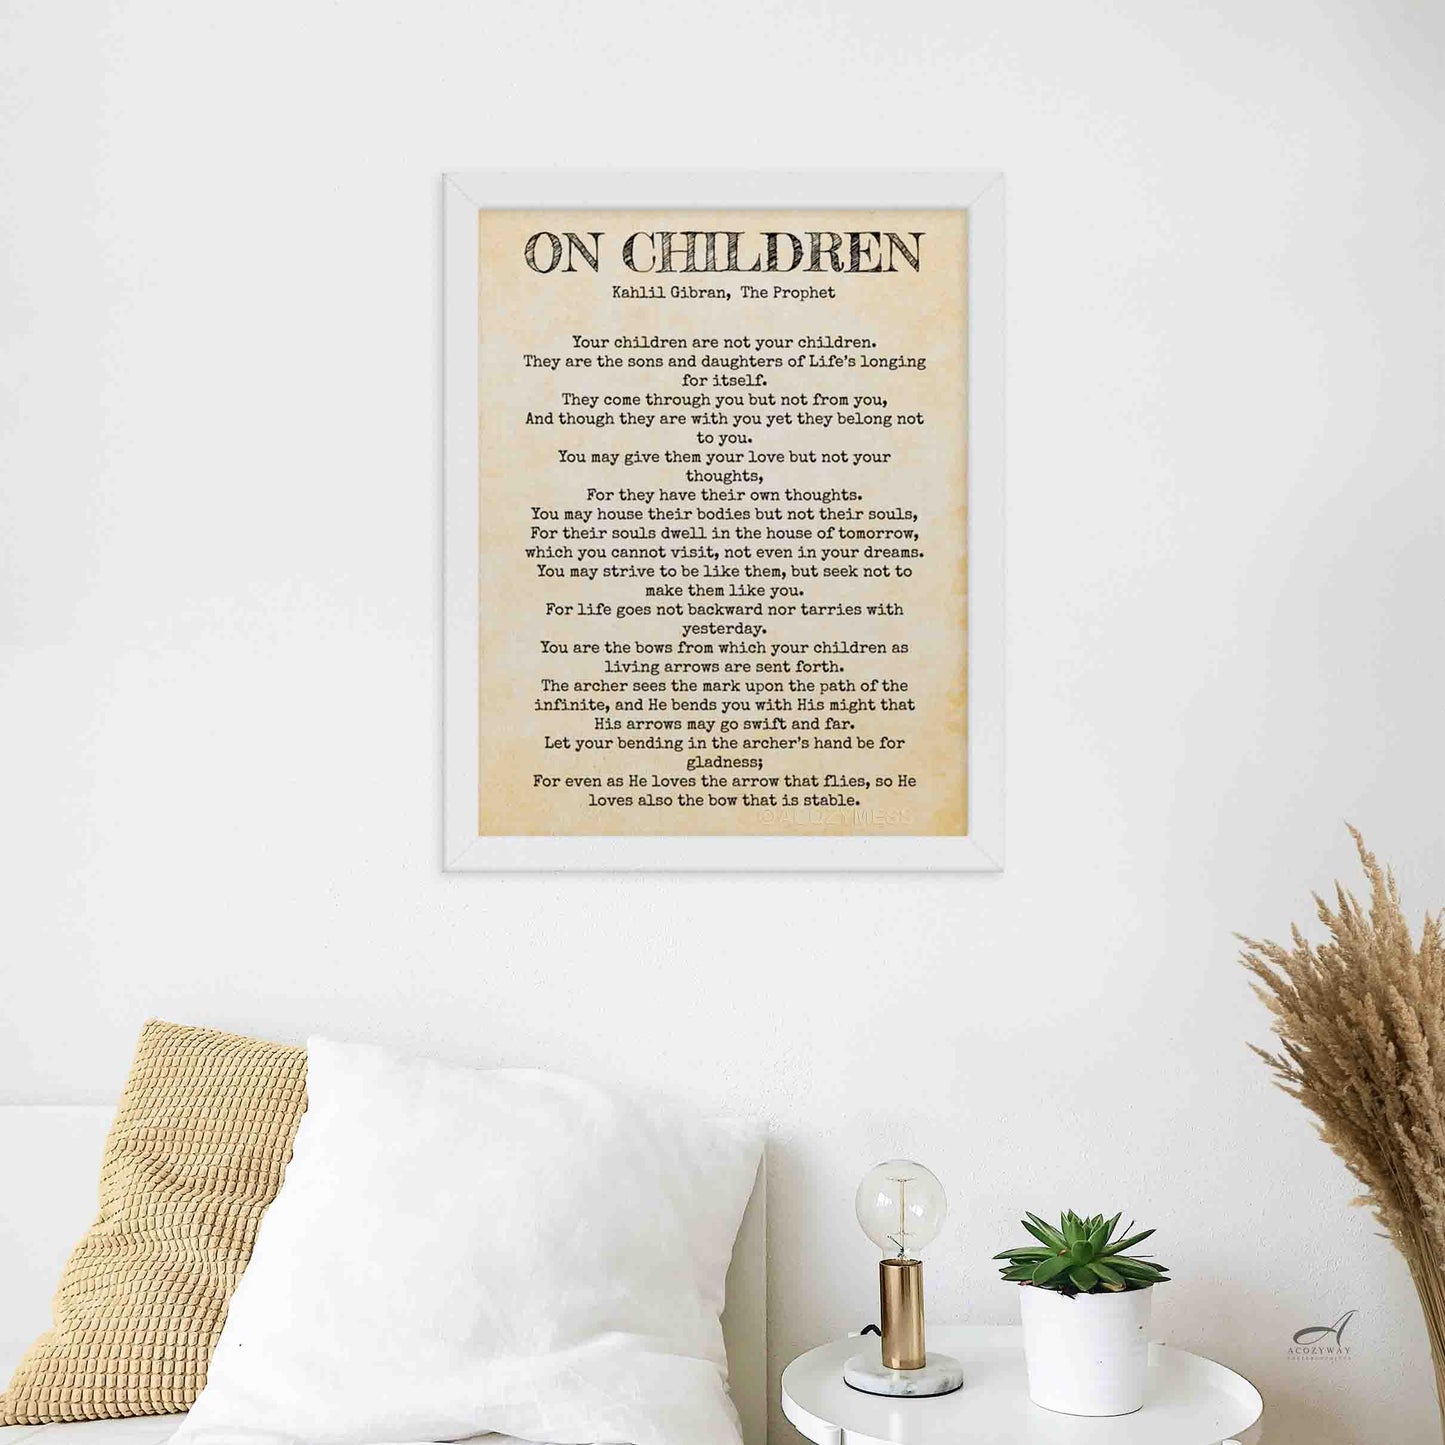 On Children by kahlil gibran poem black on rustic paper texture framed in white..